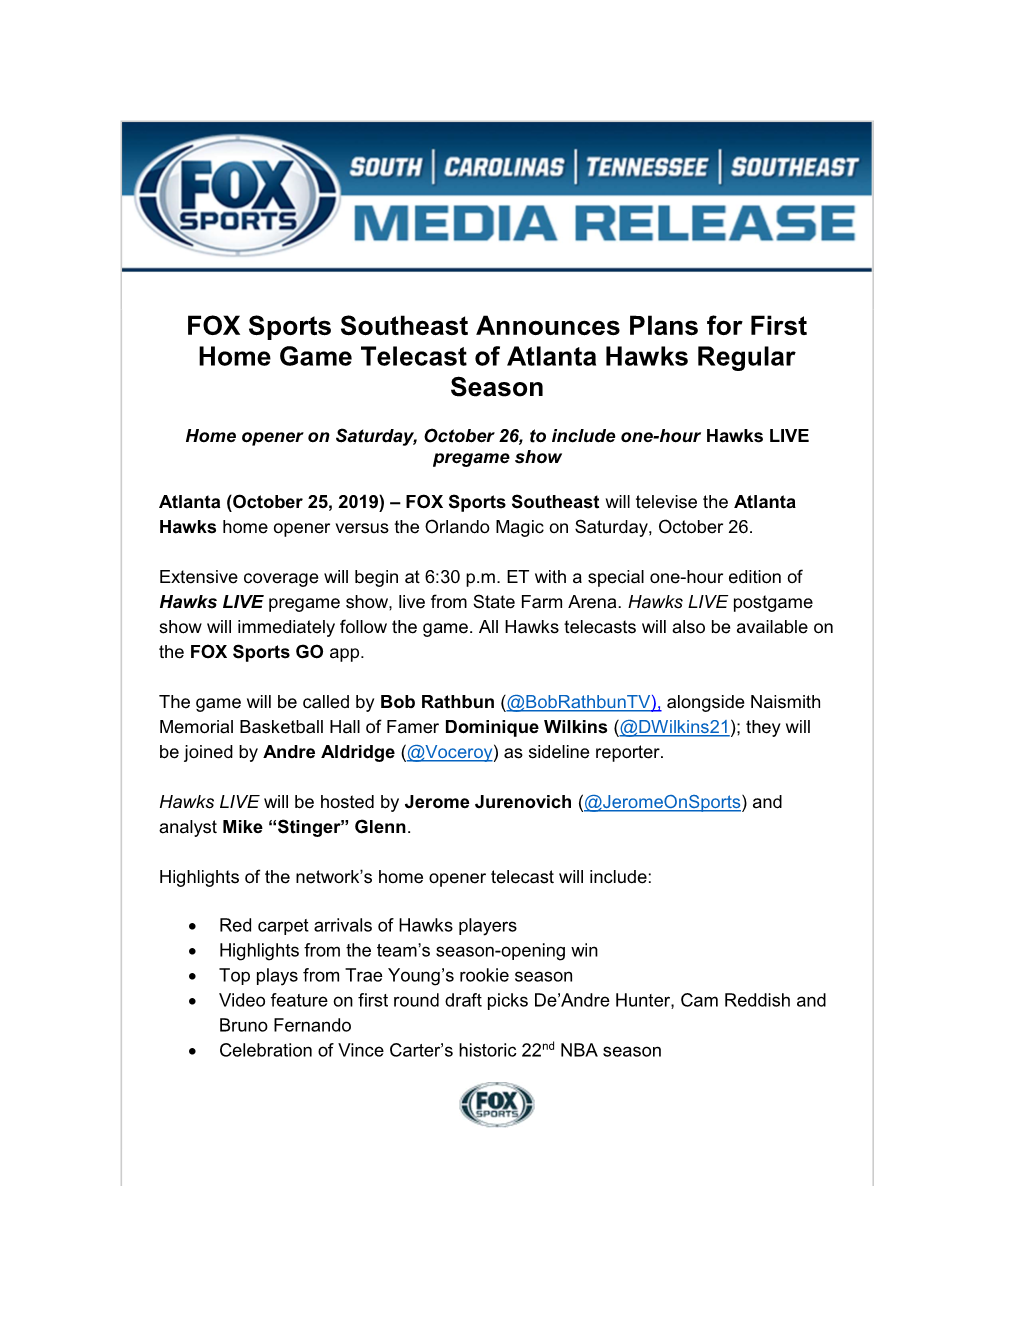 FOX Sports Southeast Announces Plans for First Home Game Telecast of Atlanta Hawks Regular Season